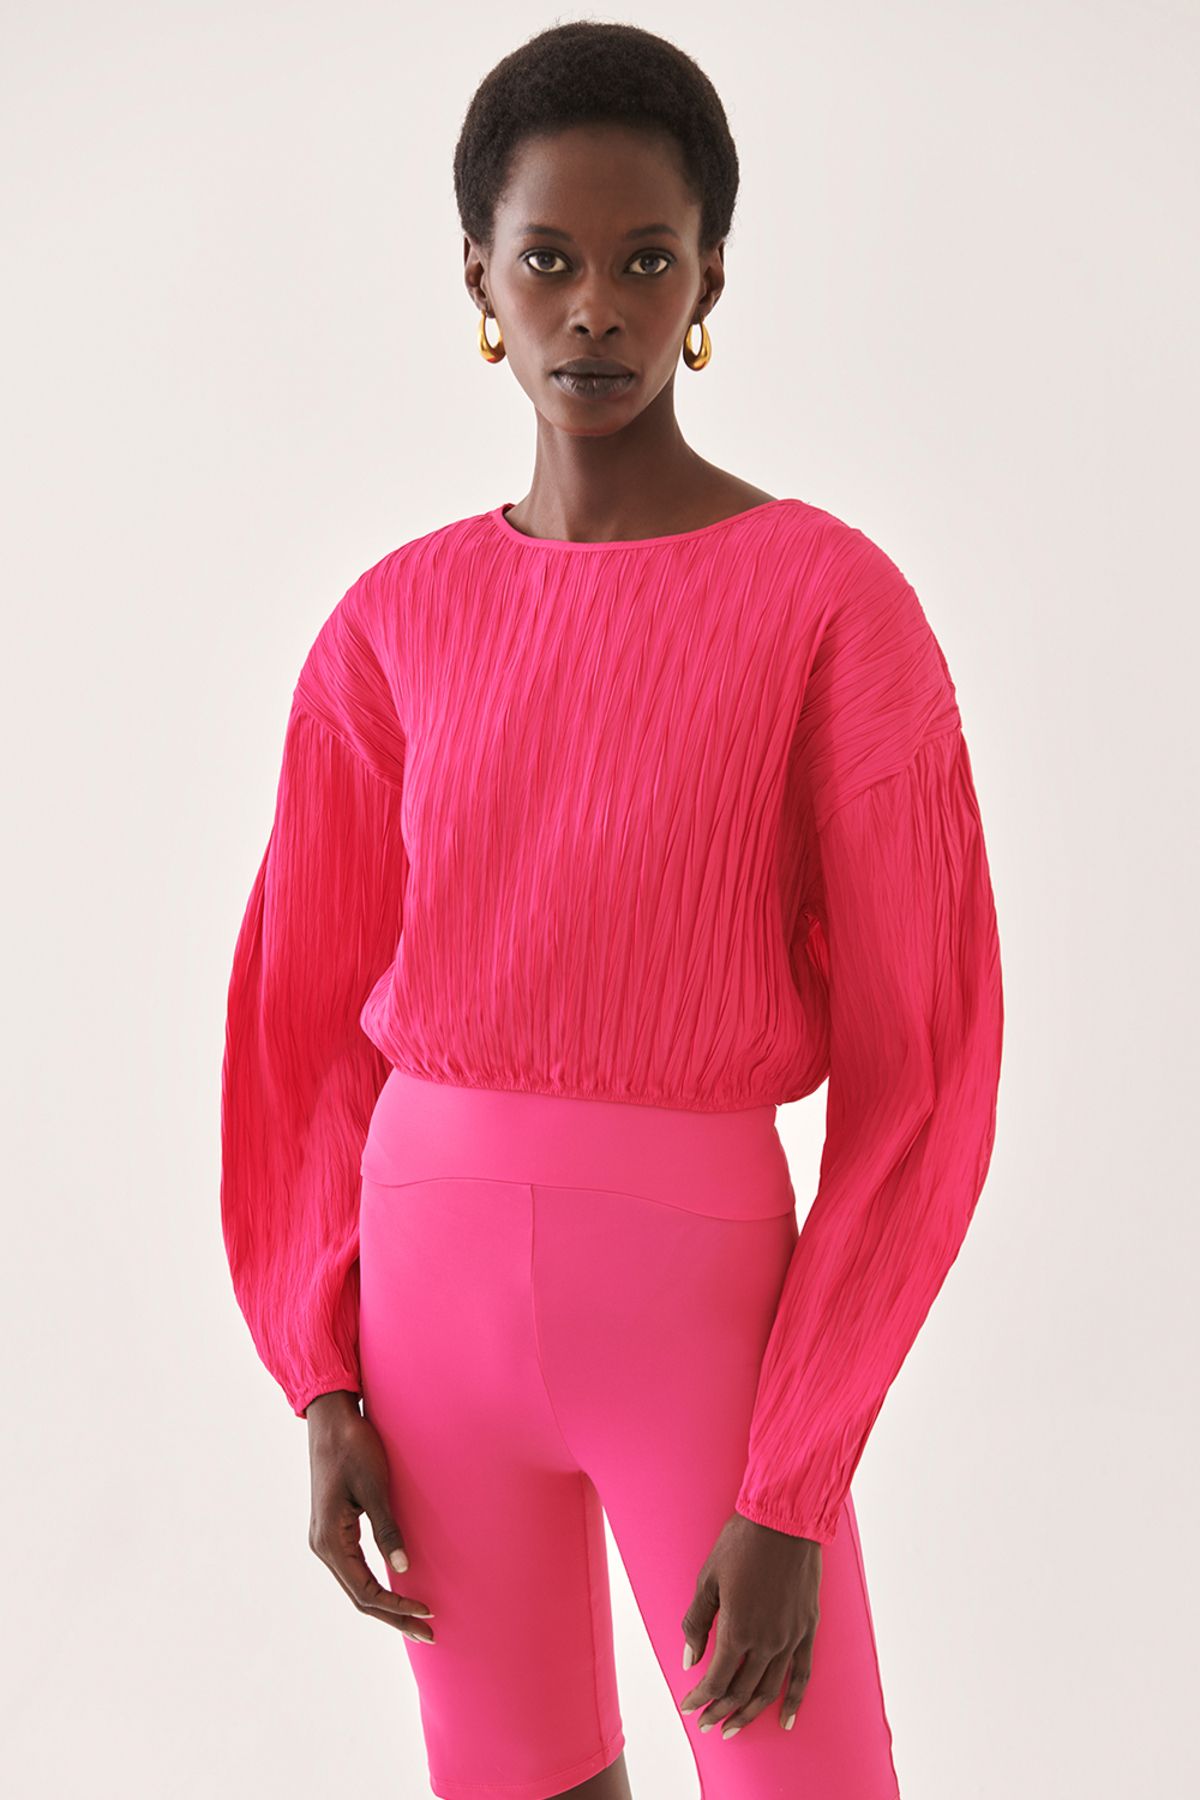 Perspective Alpinas Rahat Kalıp Kayık Yaka Fuşya Renk Kadın Crop Bluz